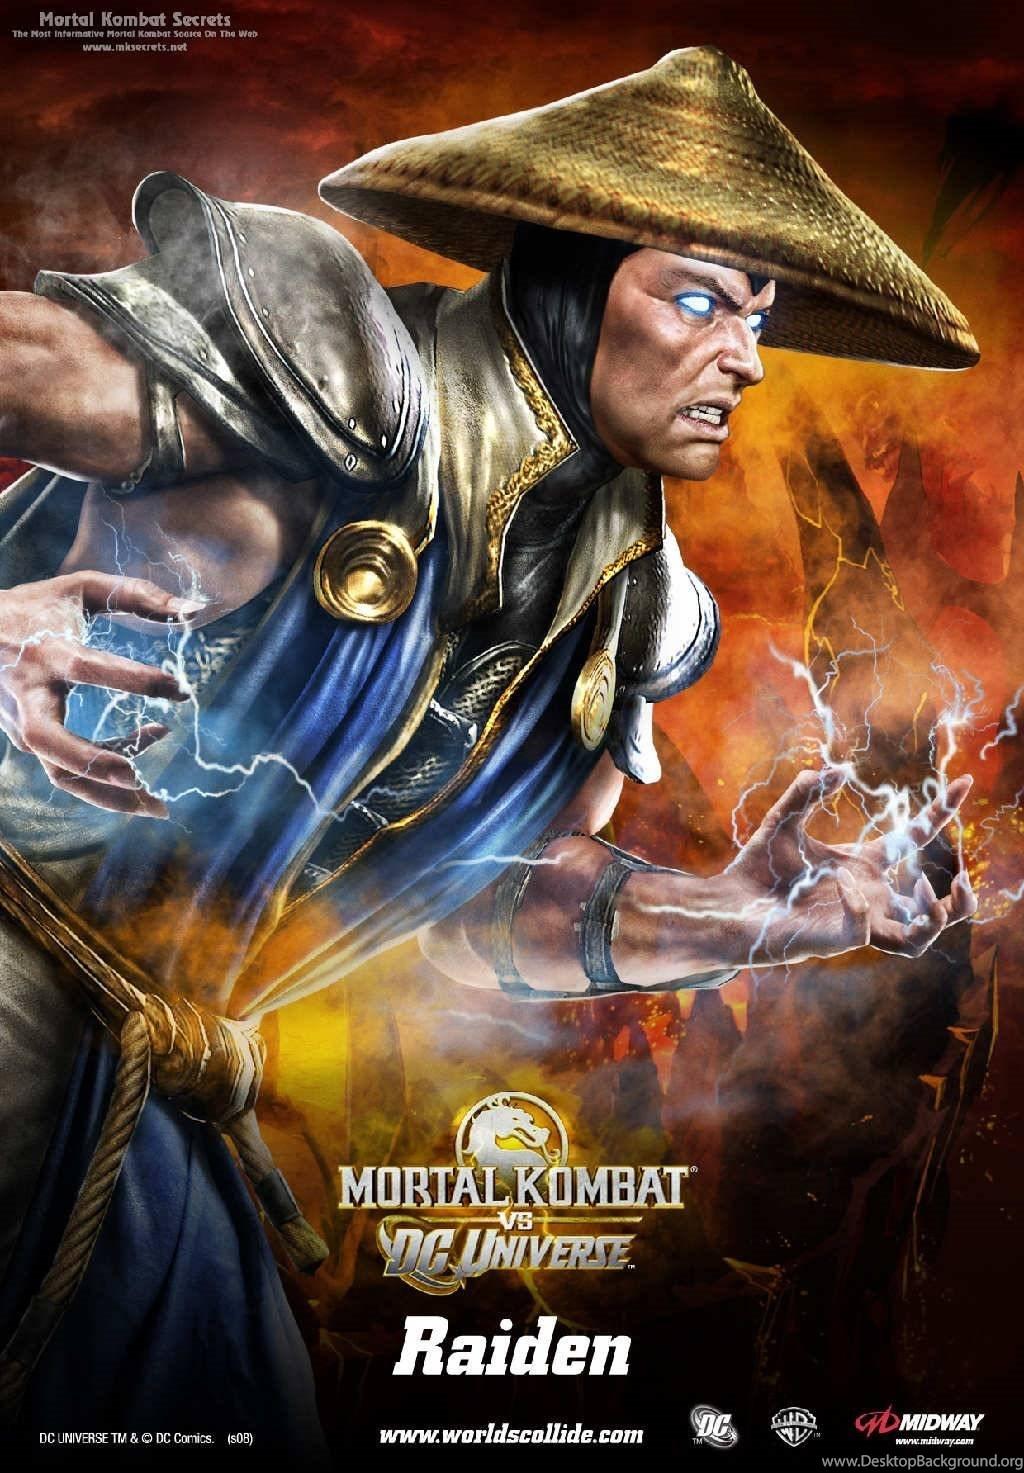 Raiden Mk Vs Dcu Thunder Mortal Kombat Wallpaper Desktop Background